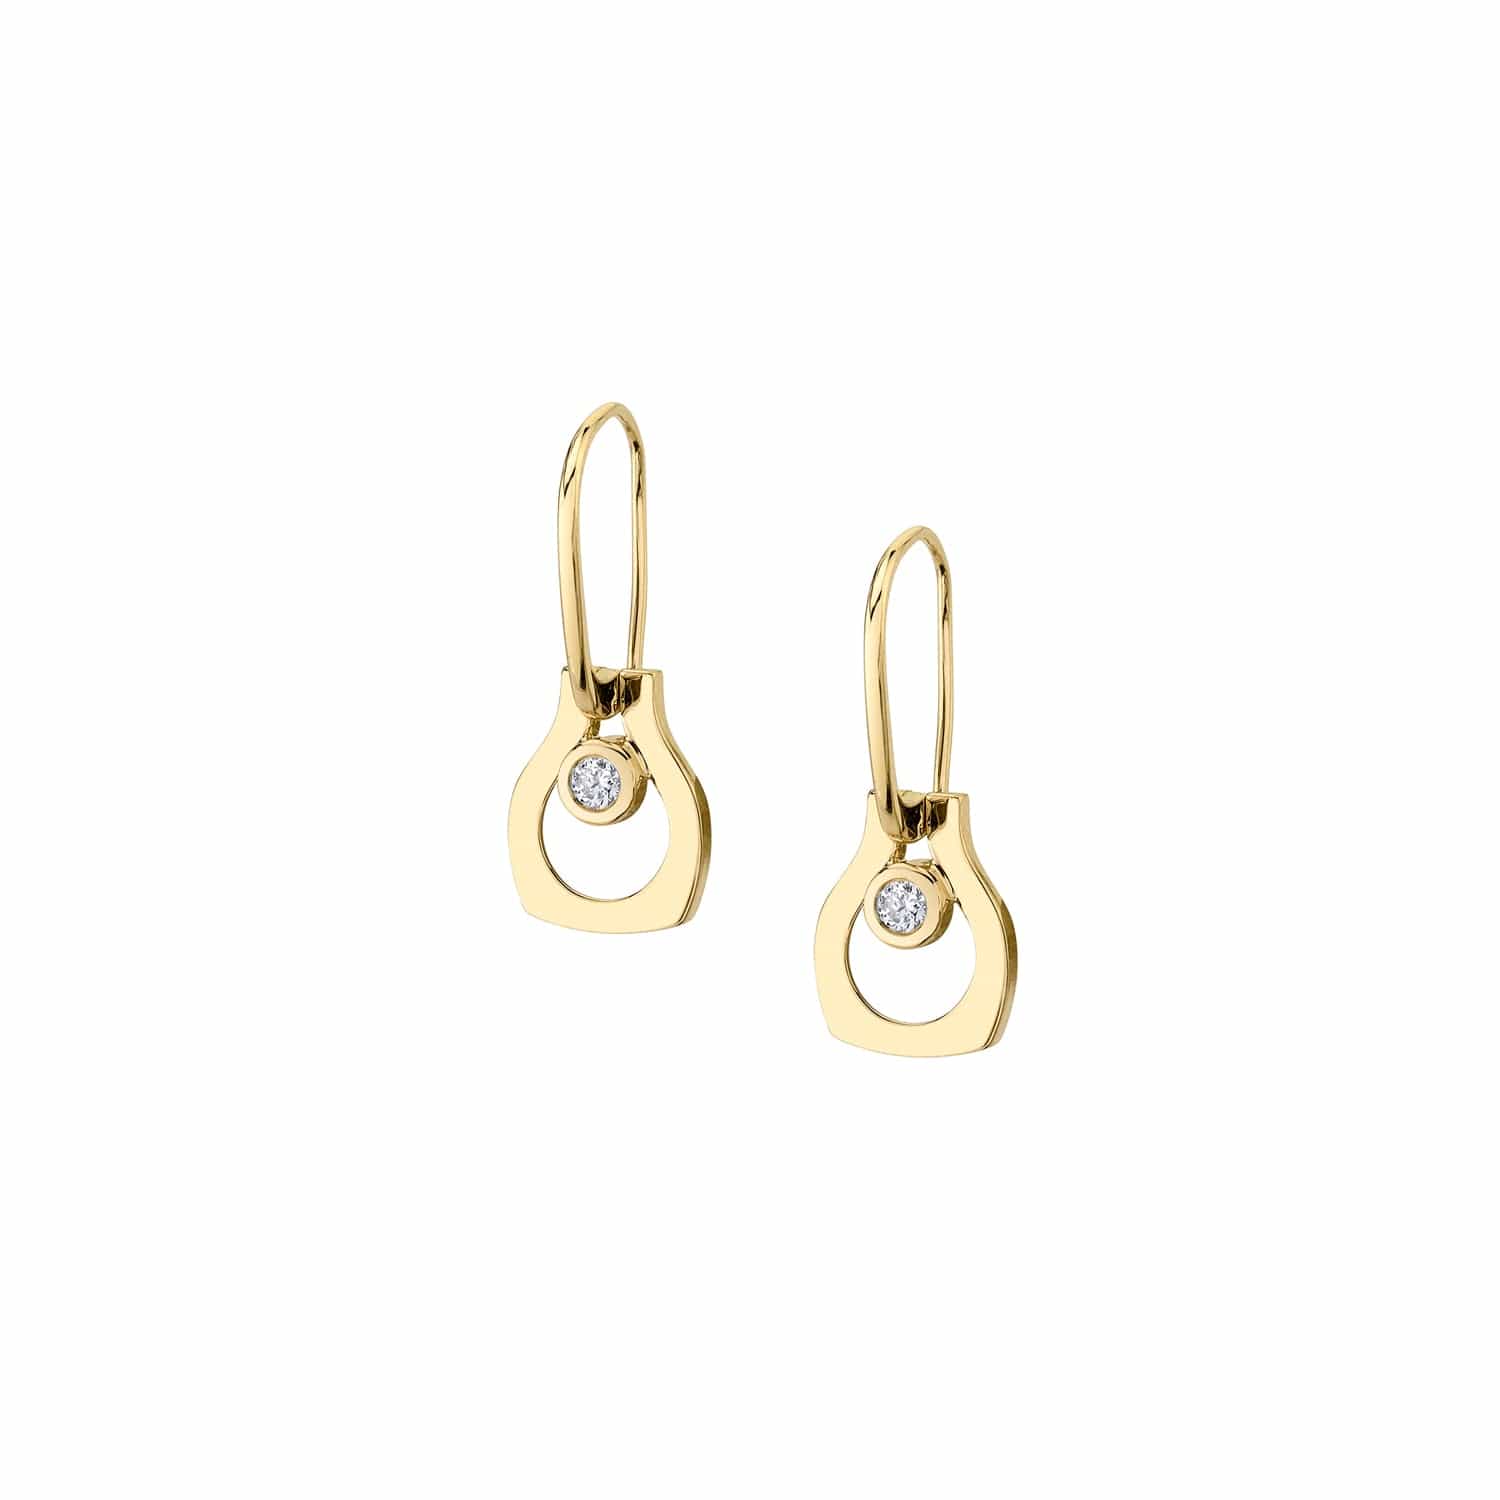 MICHAEL M Earrings 14K Yellow Gold Signature Swinging Hook Earrings ER432